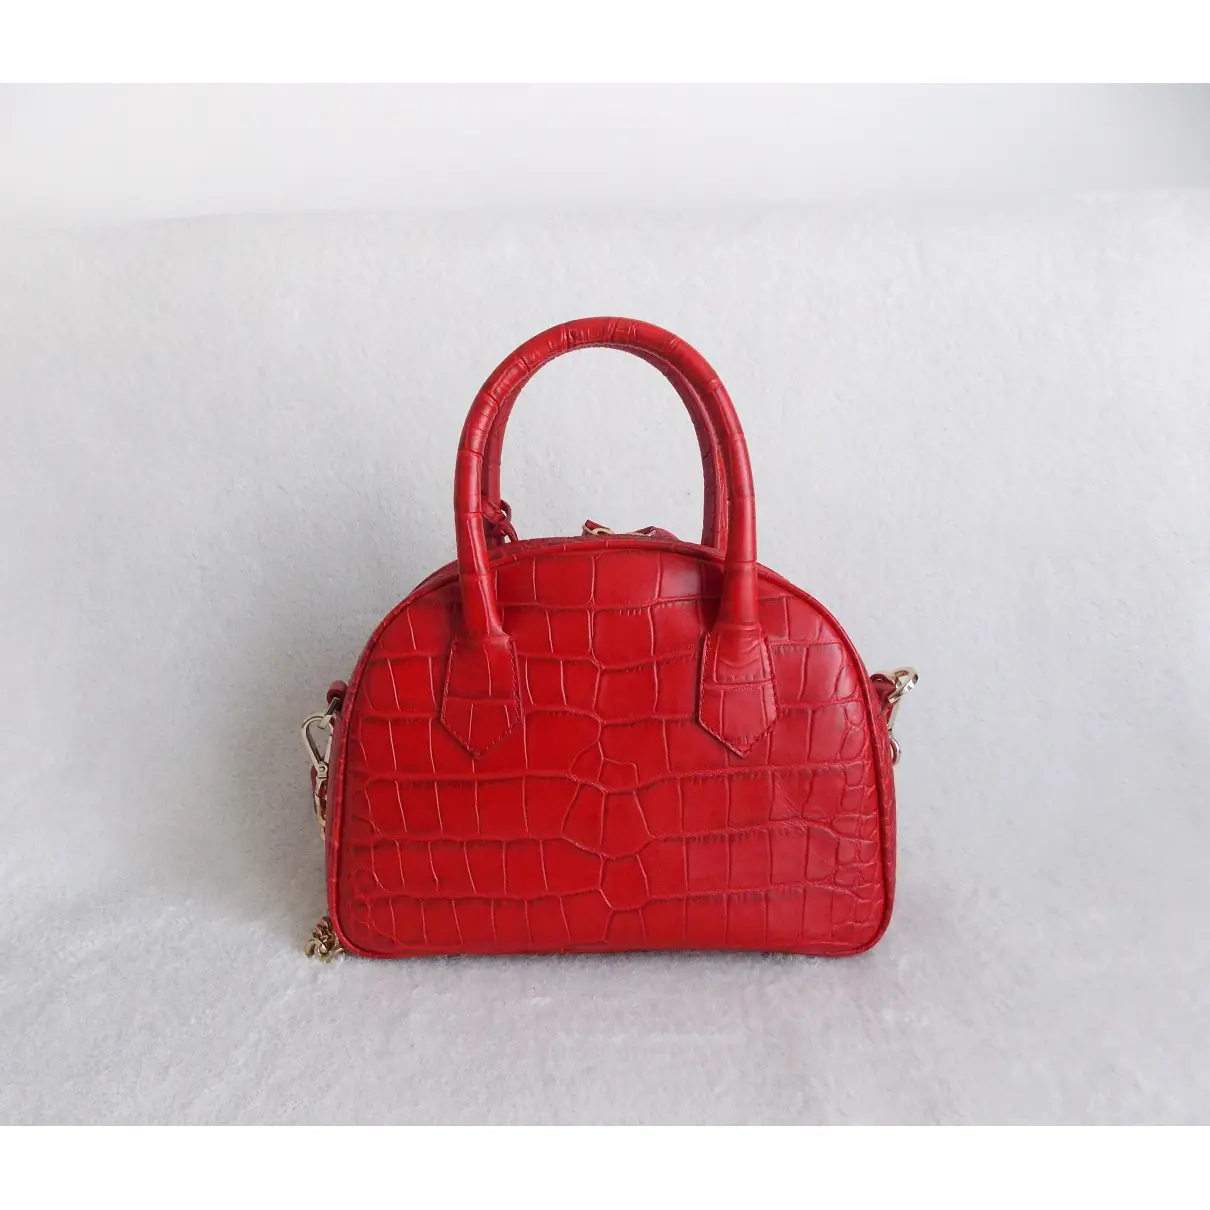 Buy The Kooples Irina leather handbag online